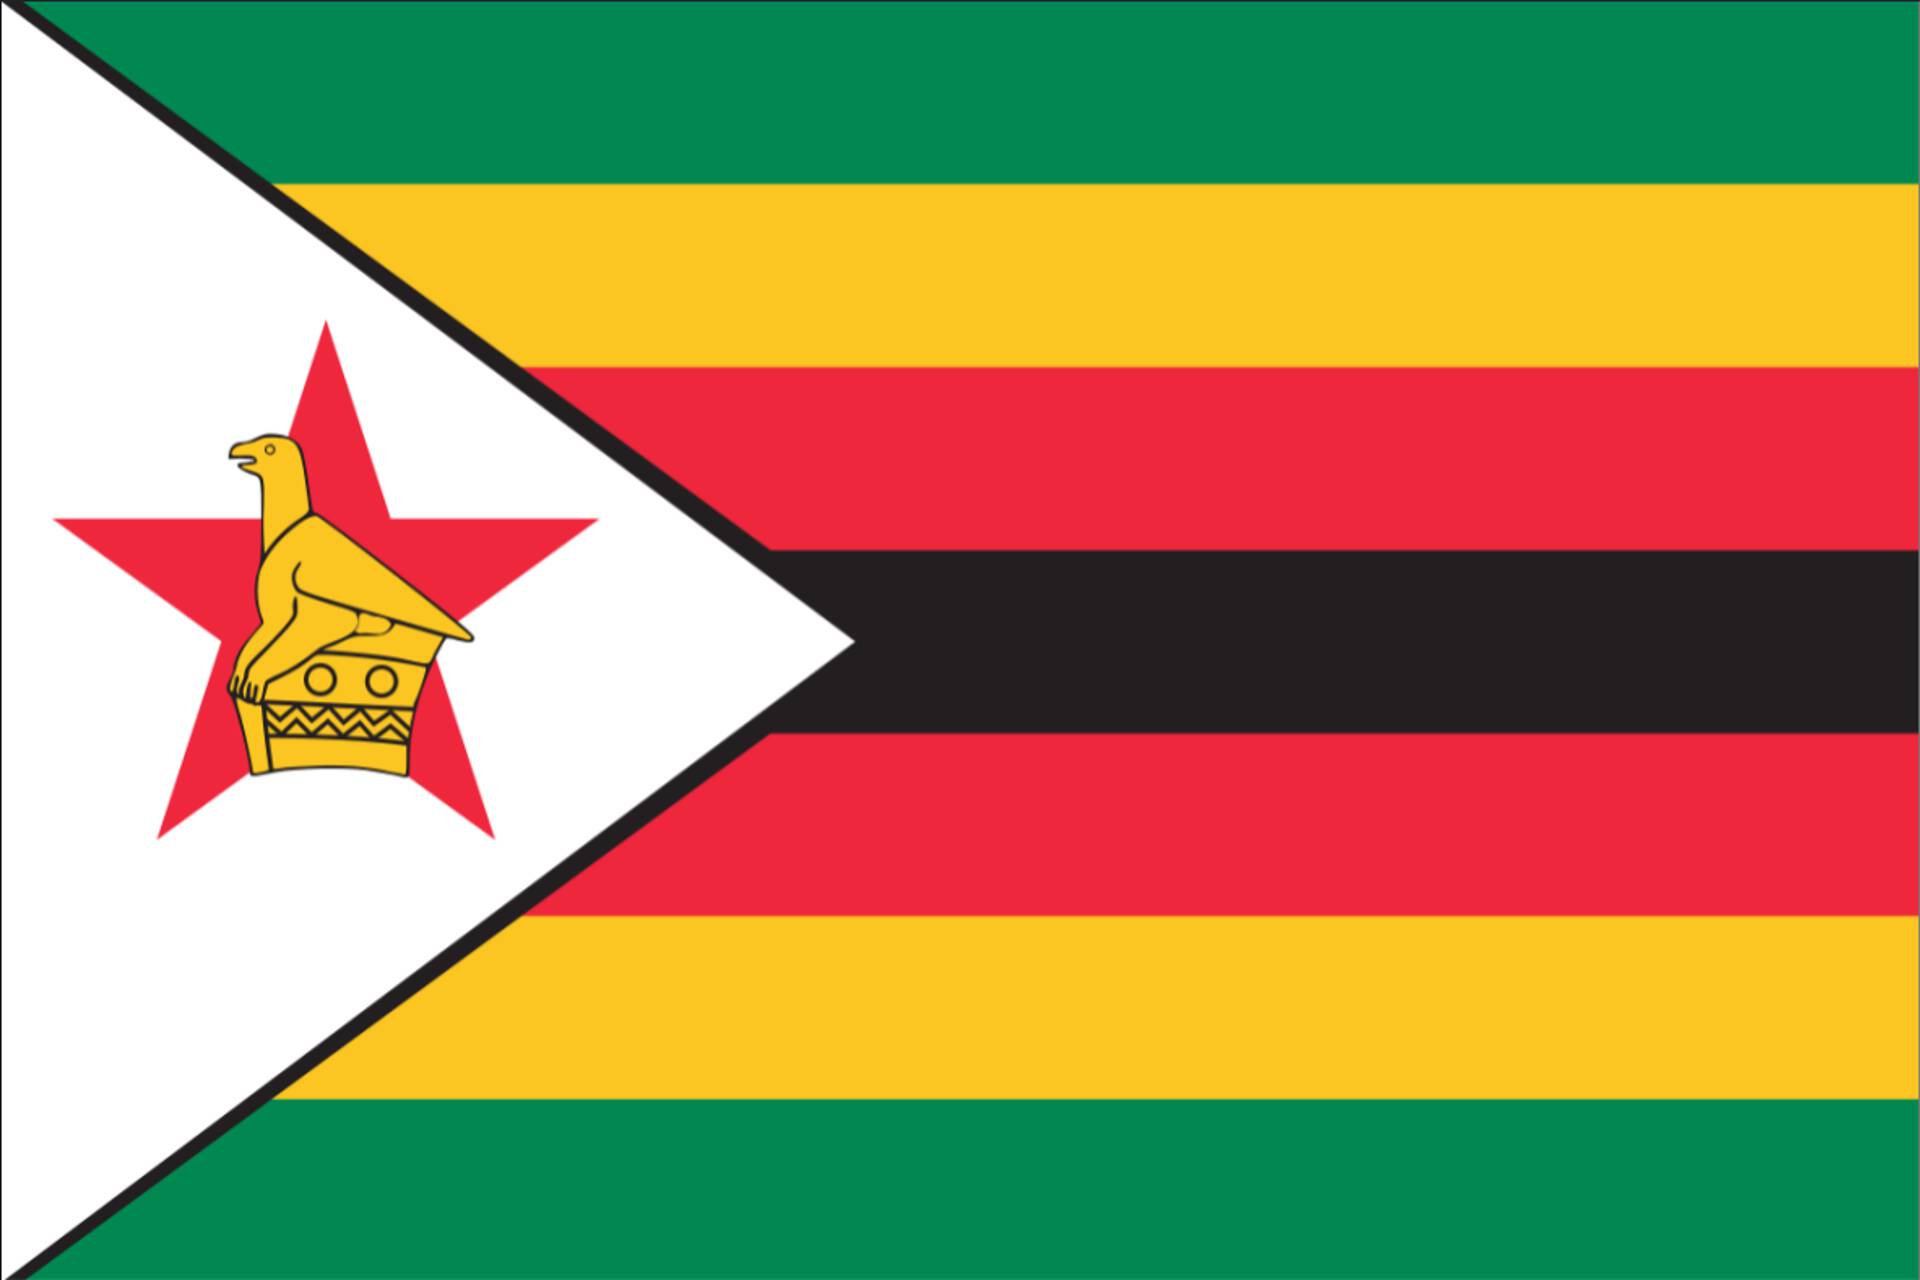 Tischflagge Simbabwe